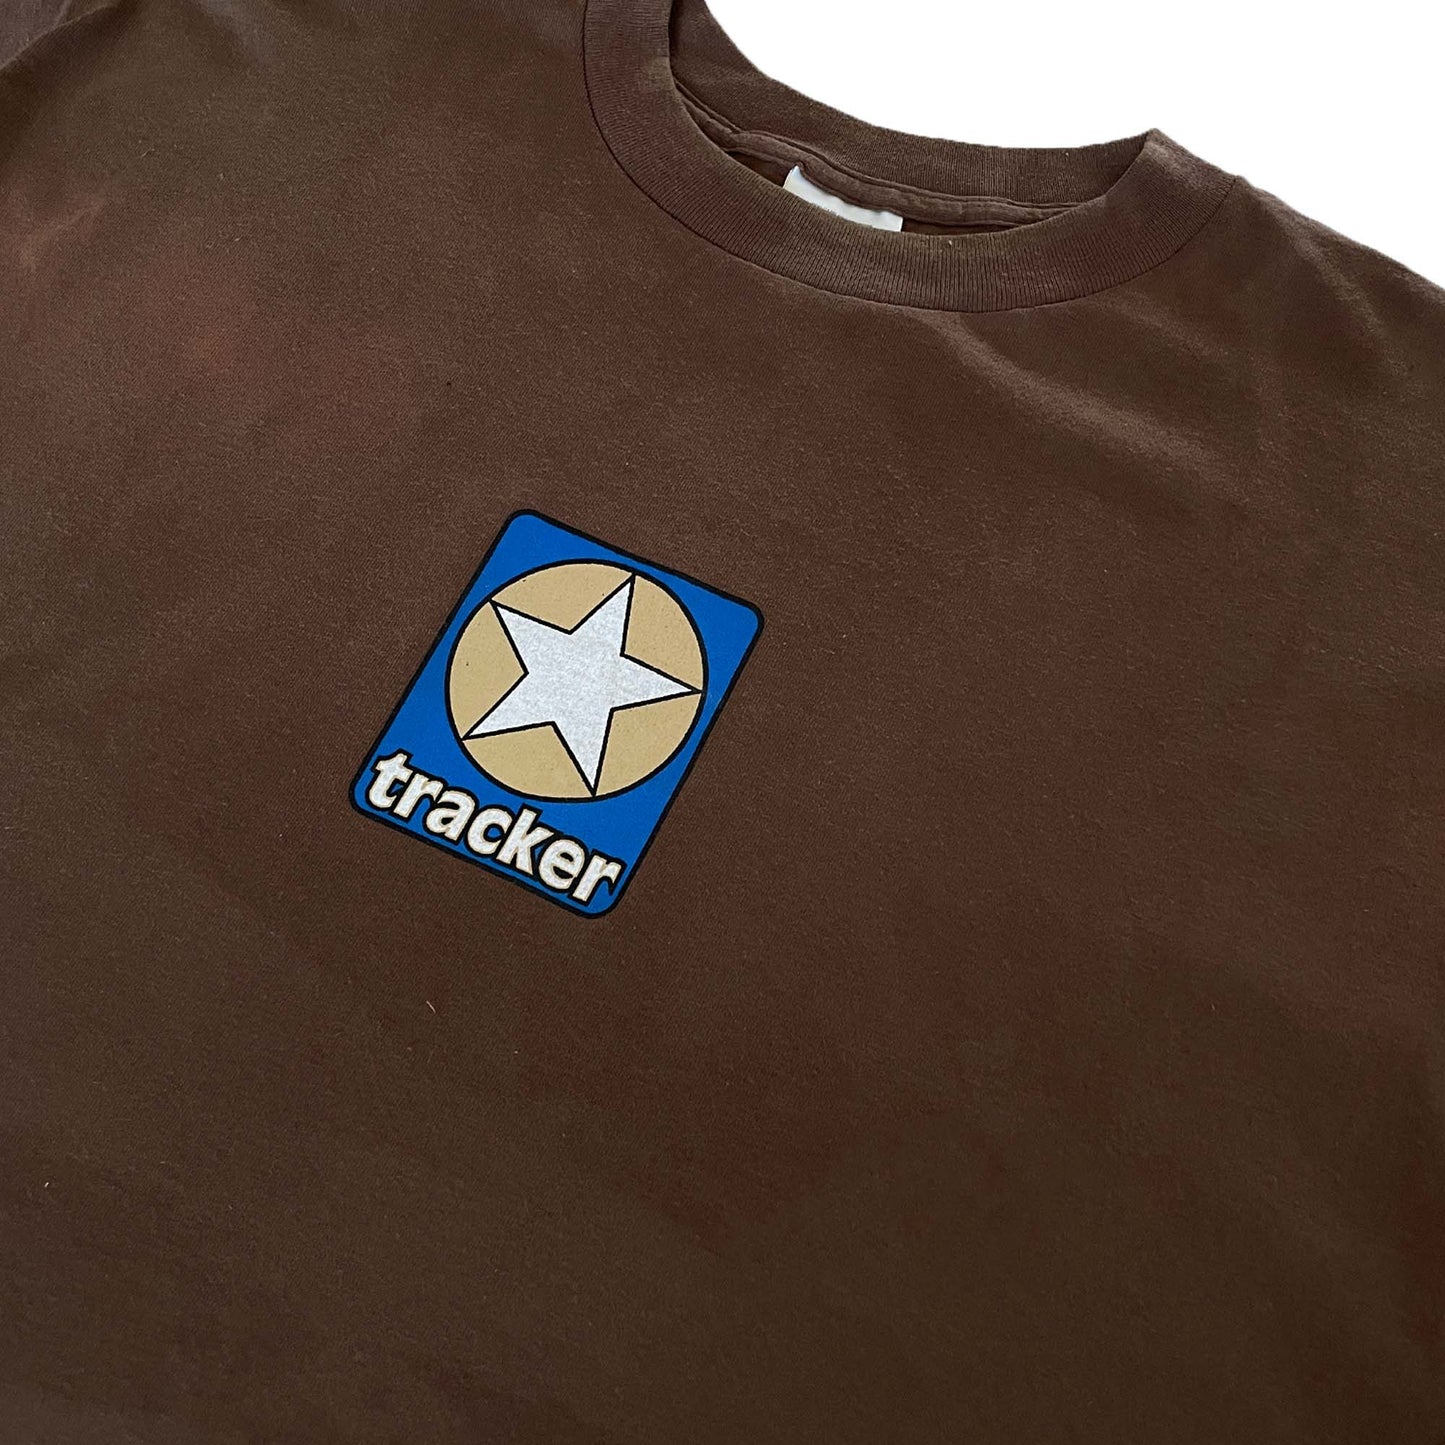 Tracker Trucks 'Star' T-Shirt (Brown) VINTAGE 90s